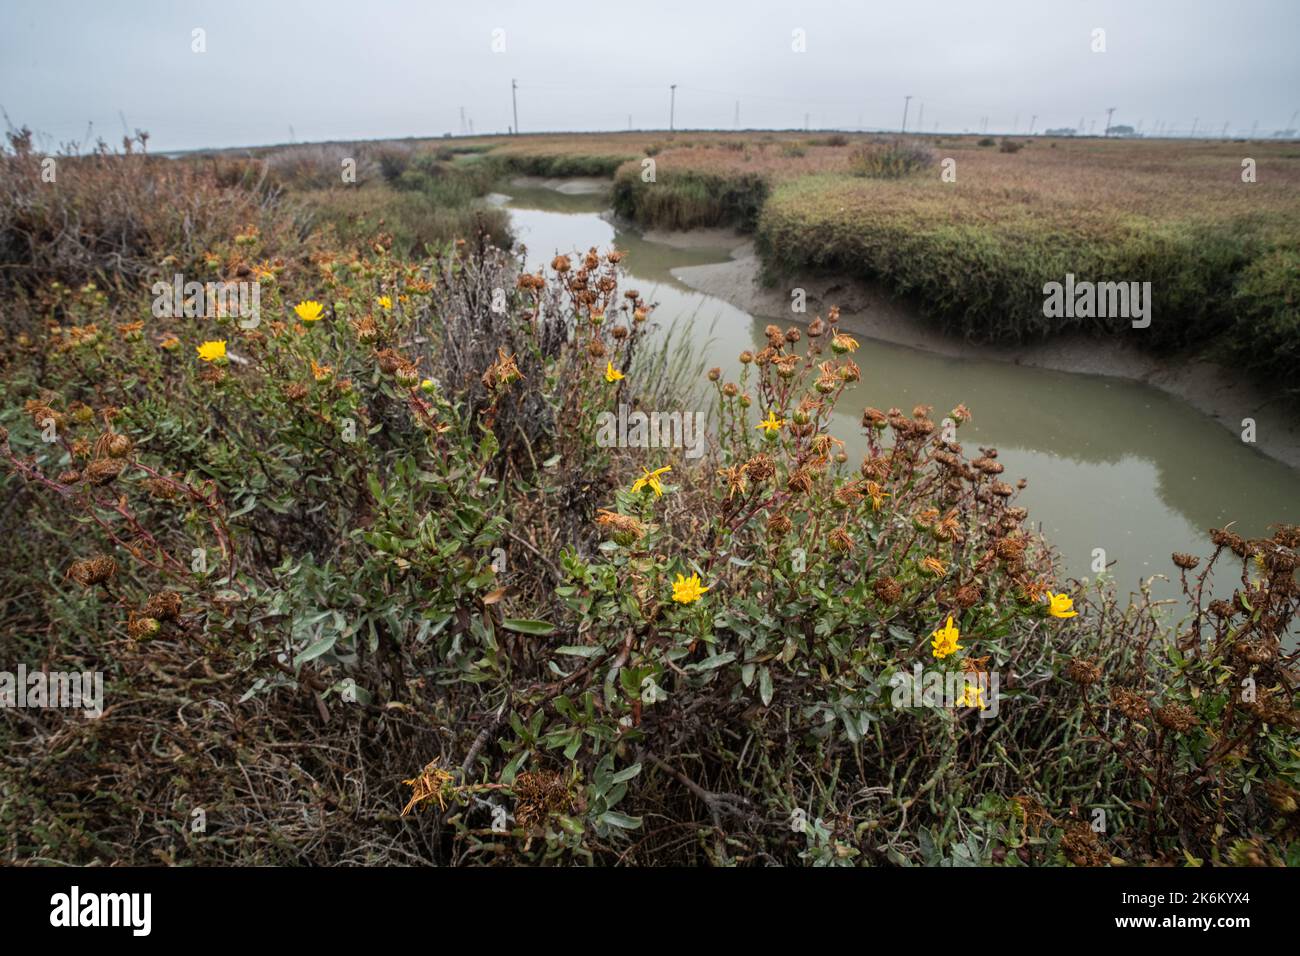 Oregon Gumweed (Grindelia stricta) growing in a coastal salt marsh in the San Francisco Bay area of California. Stock Photo